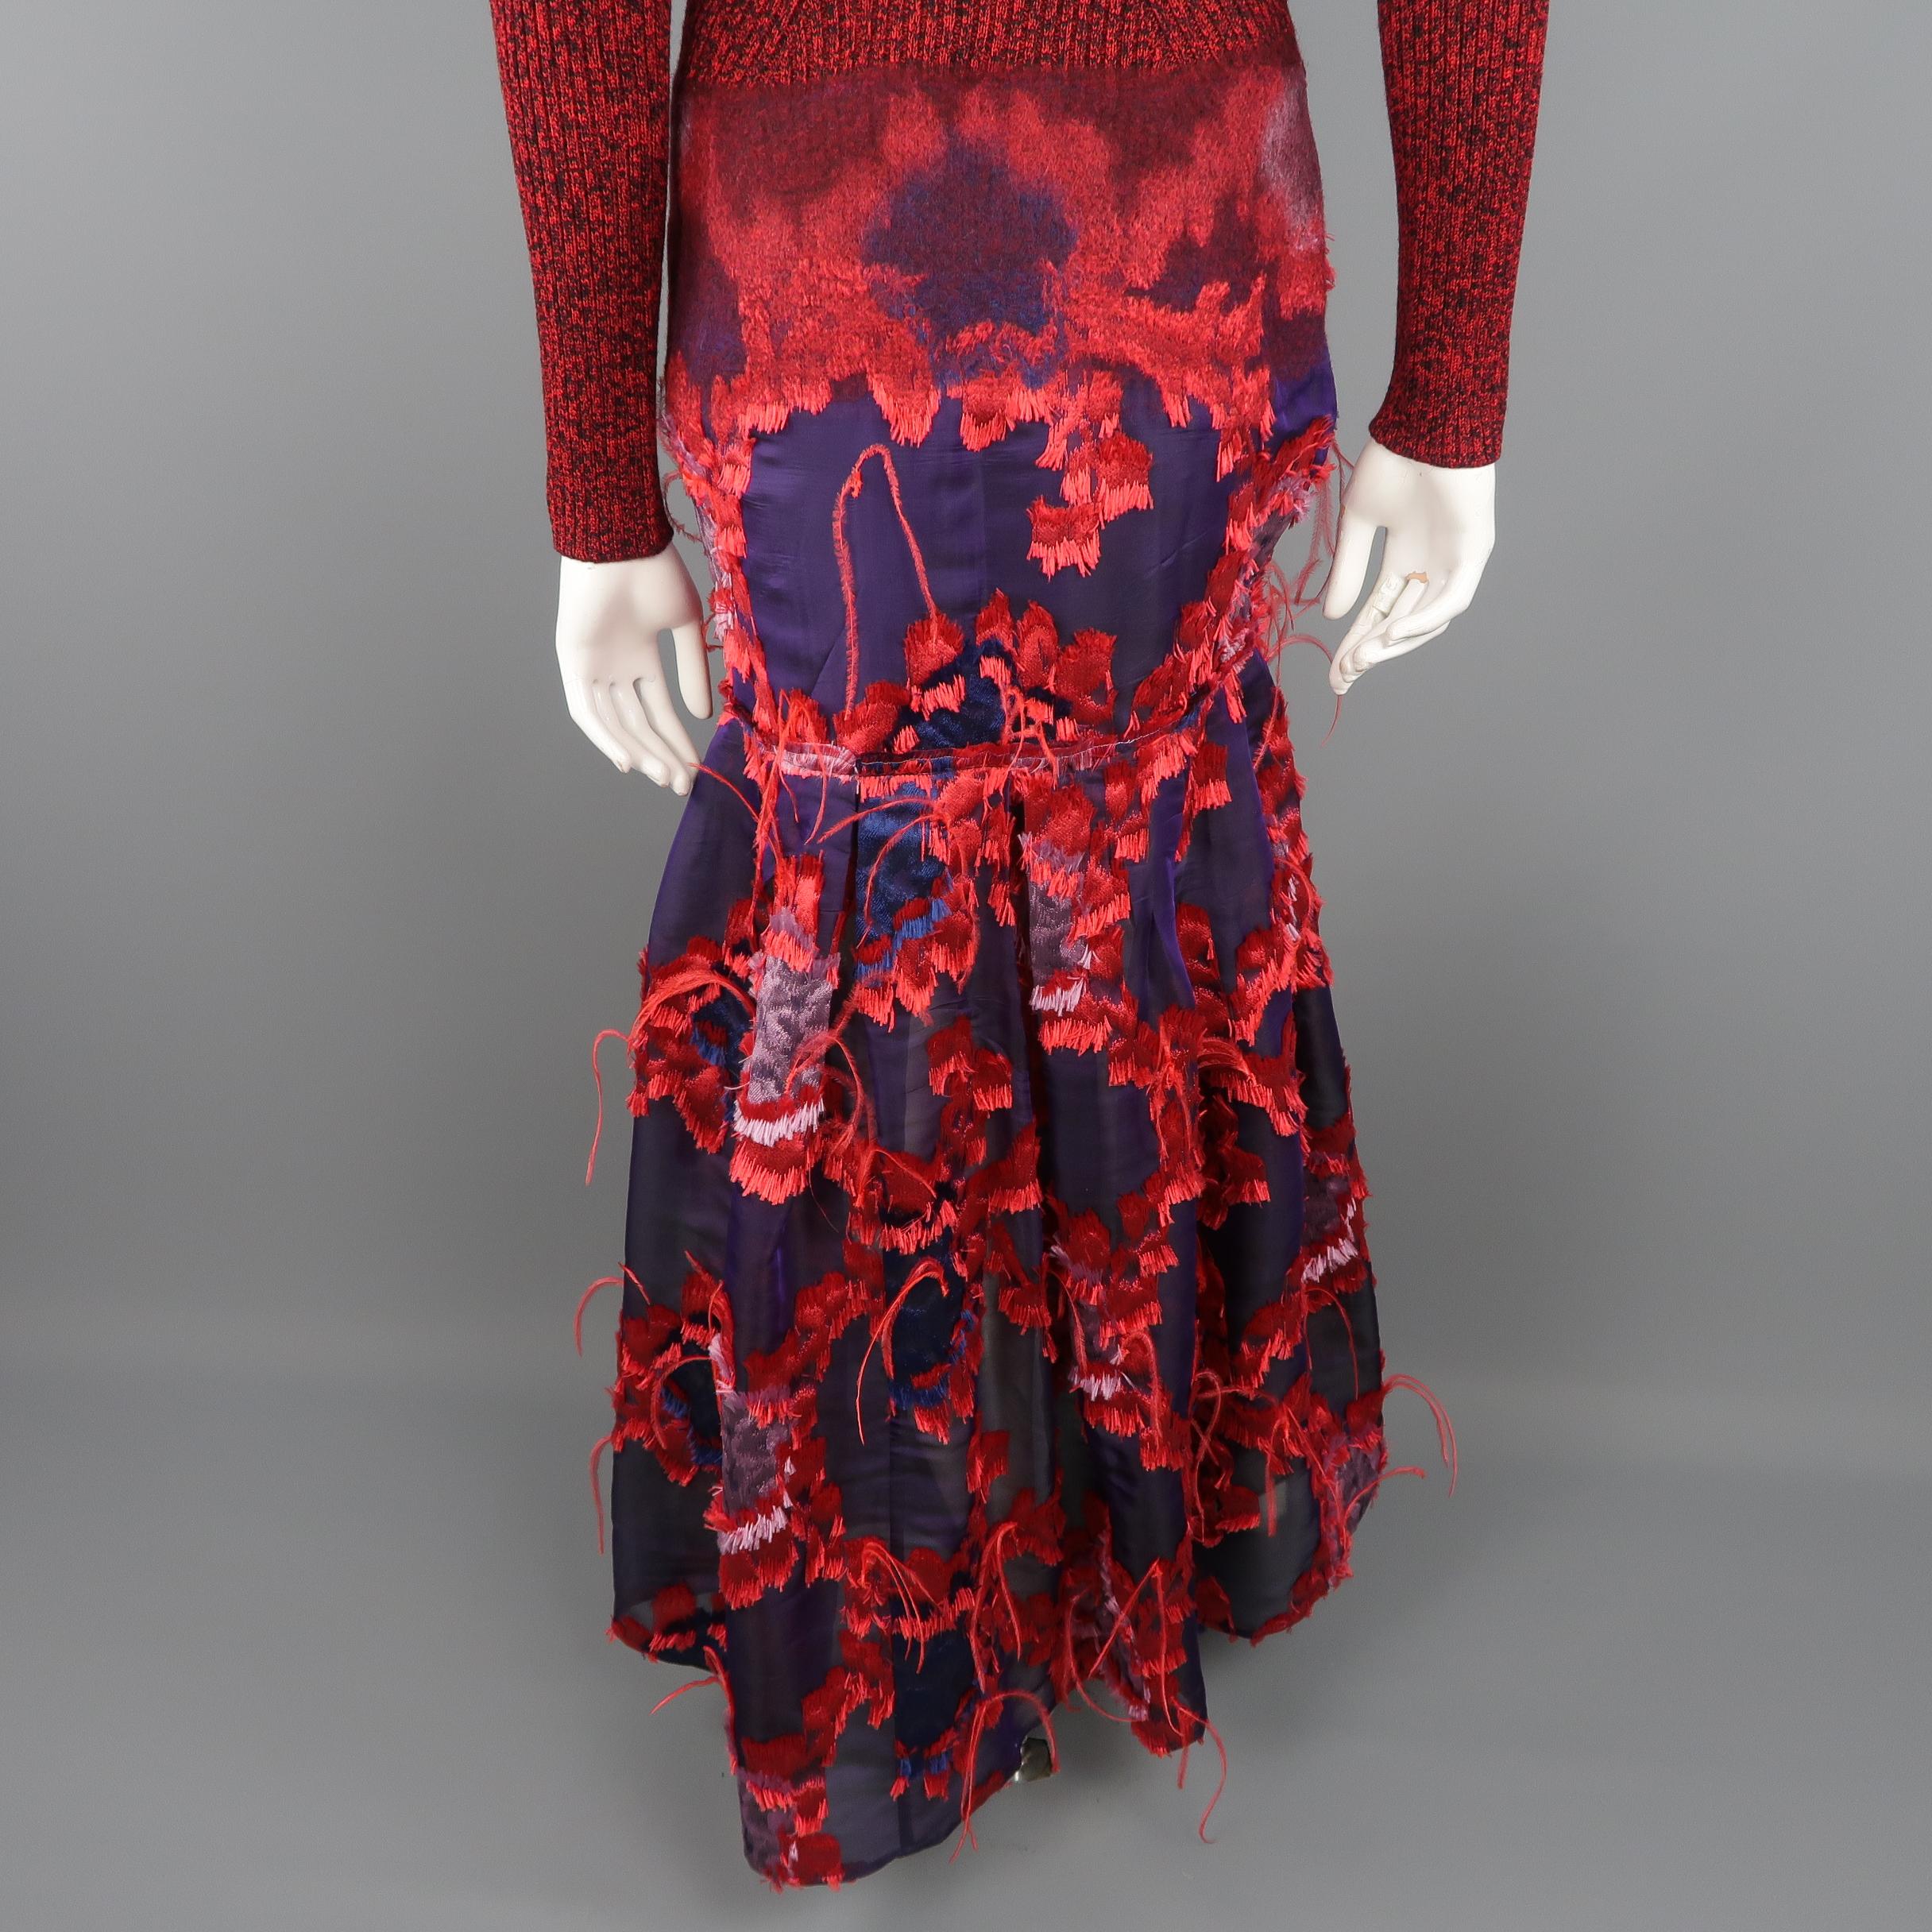 ERDEM Gown - Fall 2015 Runway - Red, Purple, Knit, Taffeta Feather Evening Dress 7